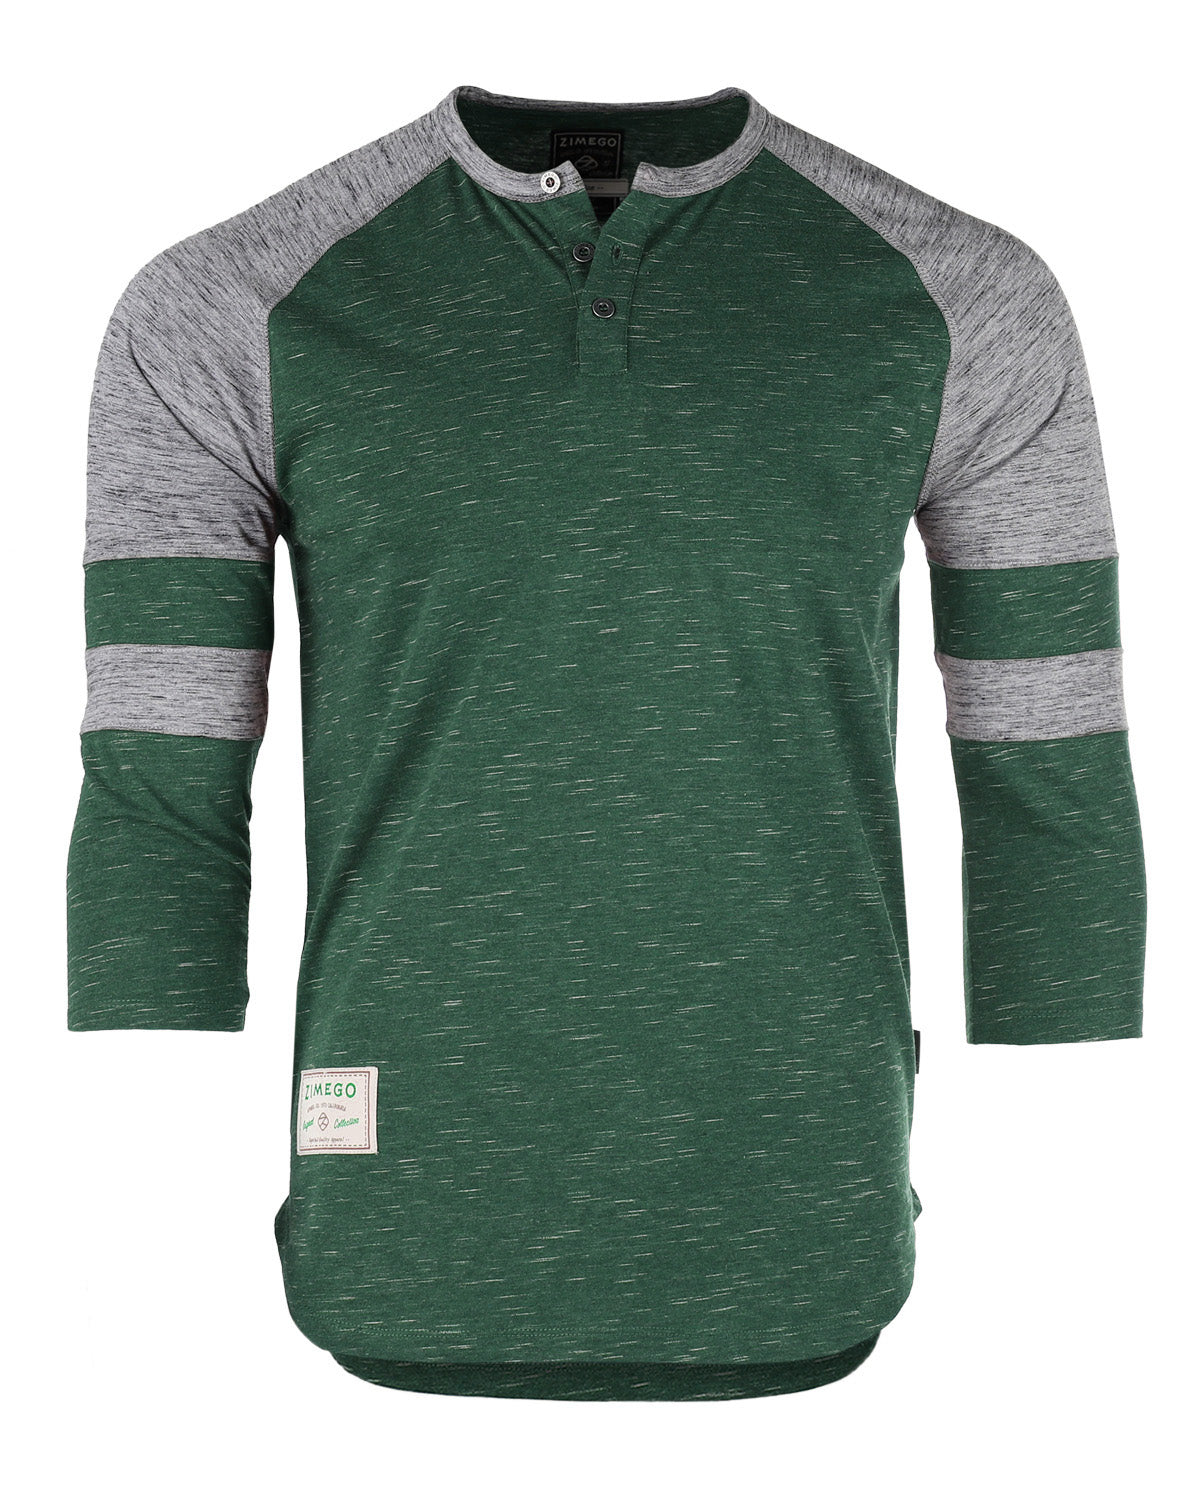 Men's 3/4 Sleeve Green Baseball Football College Raglan Henley Athletic T-shirt